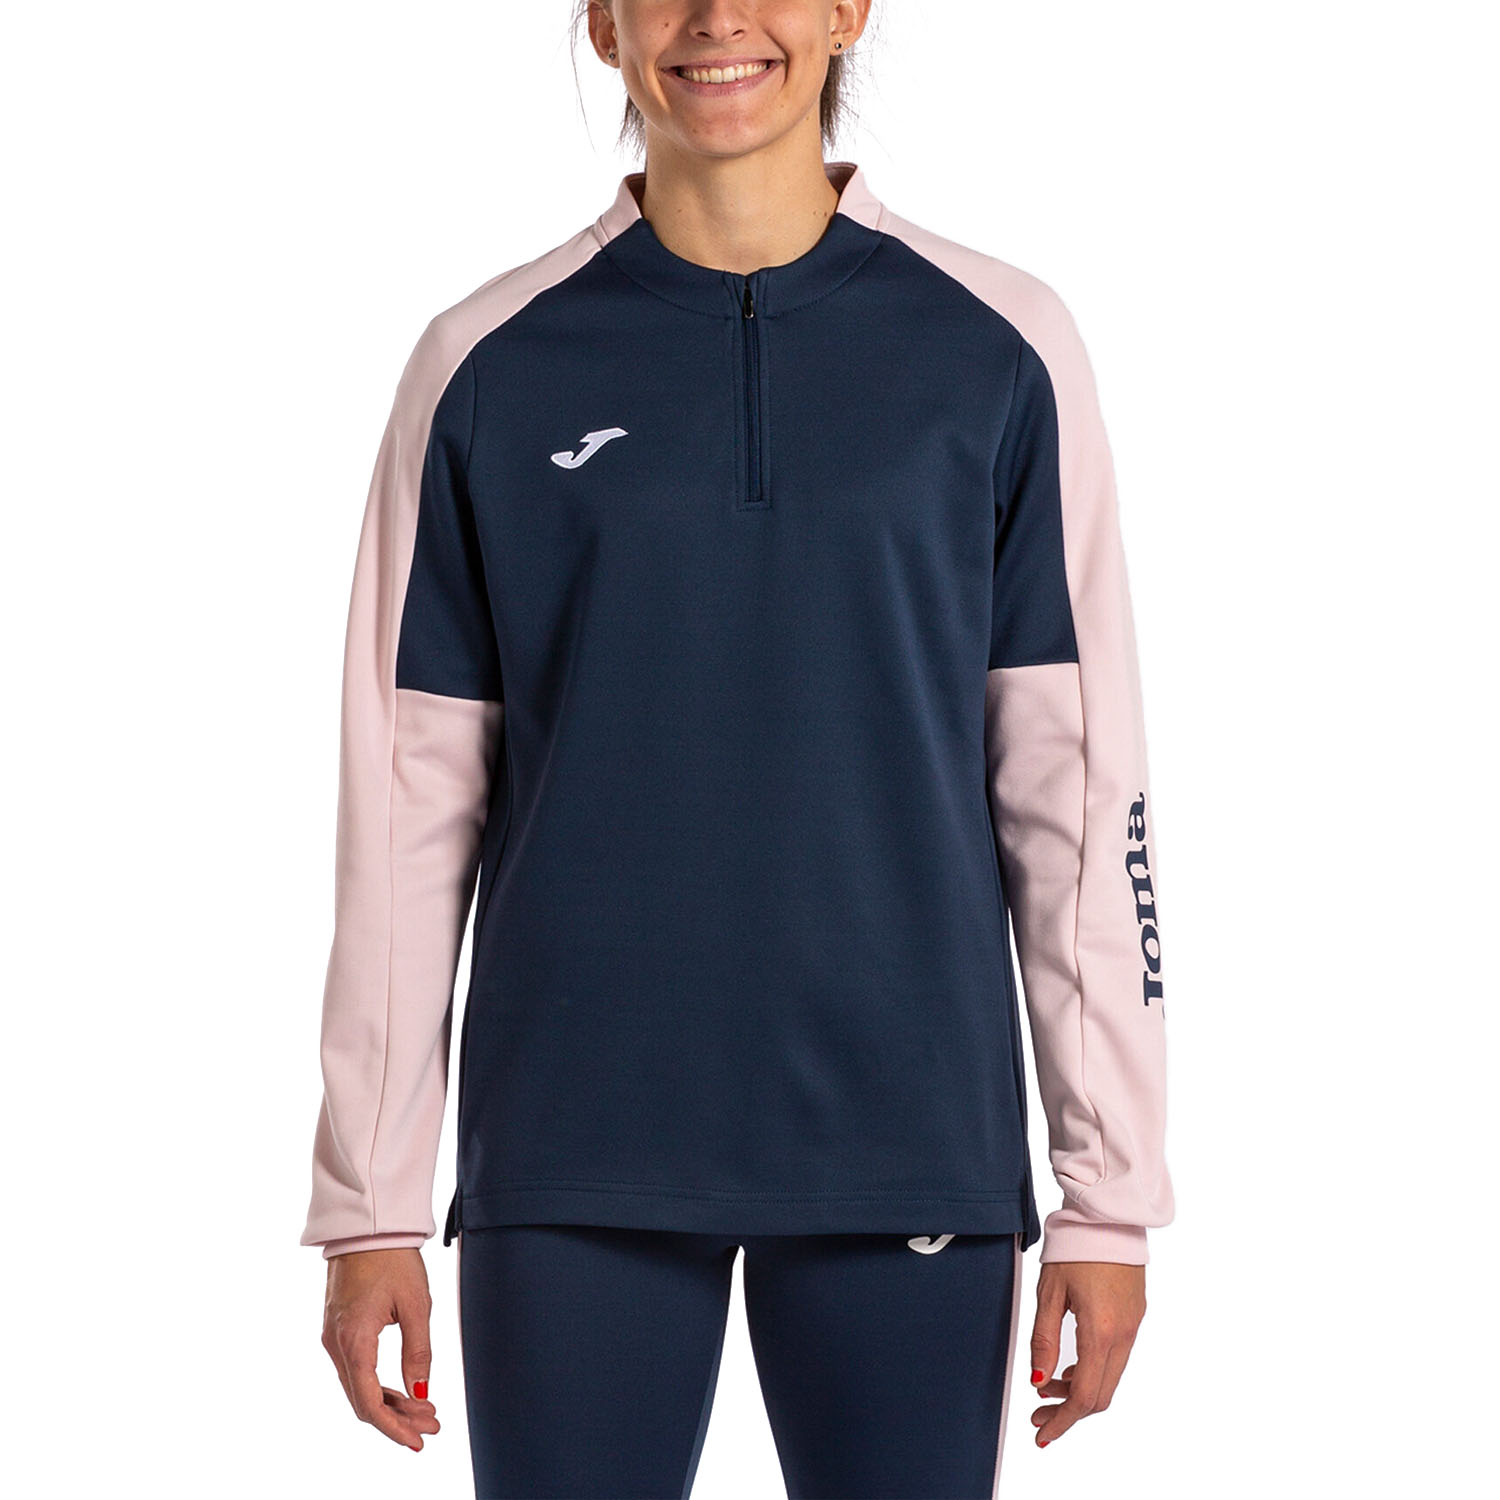 Joma Eco Championship Camisa - Navy/Pink